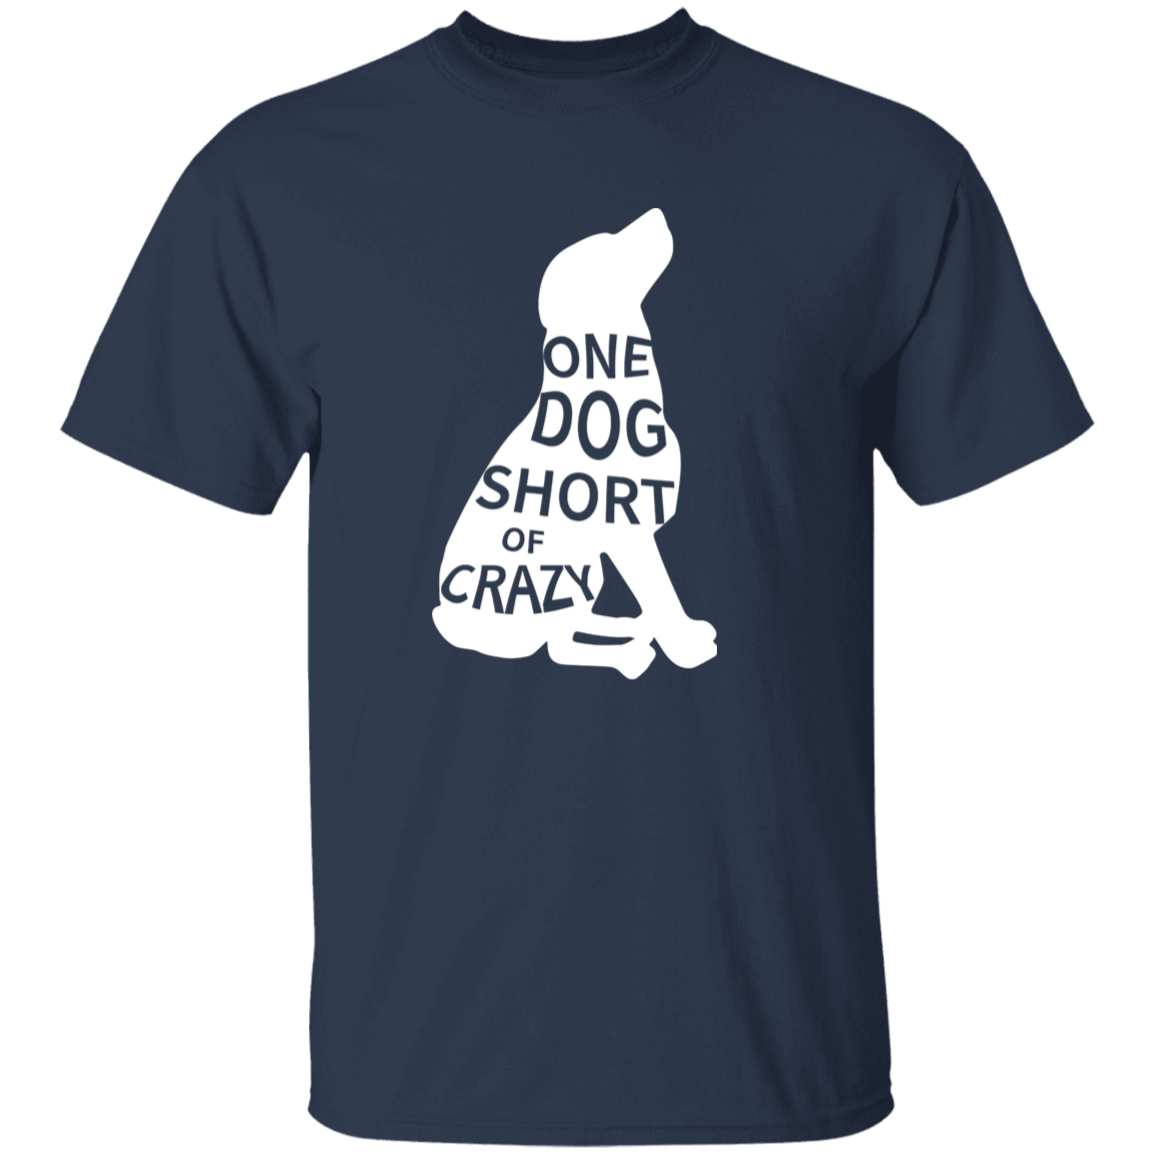 One Dog Short Of Crazy - T Shirt.